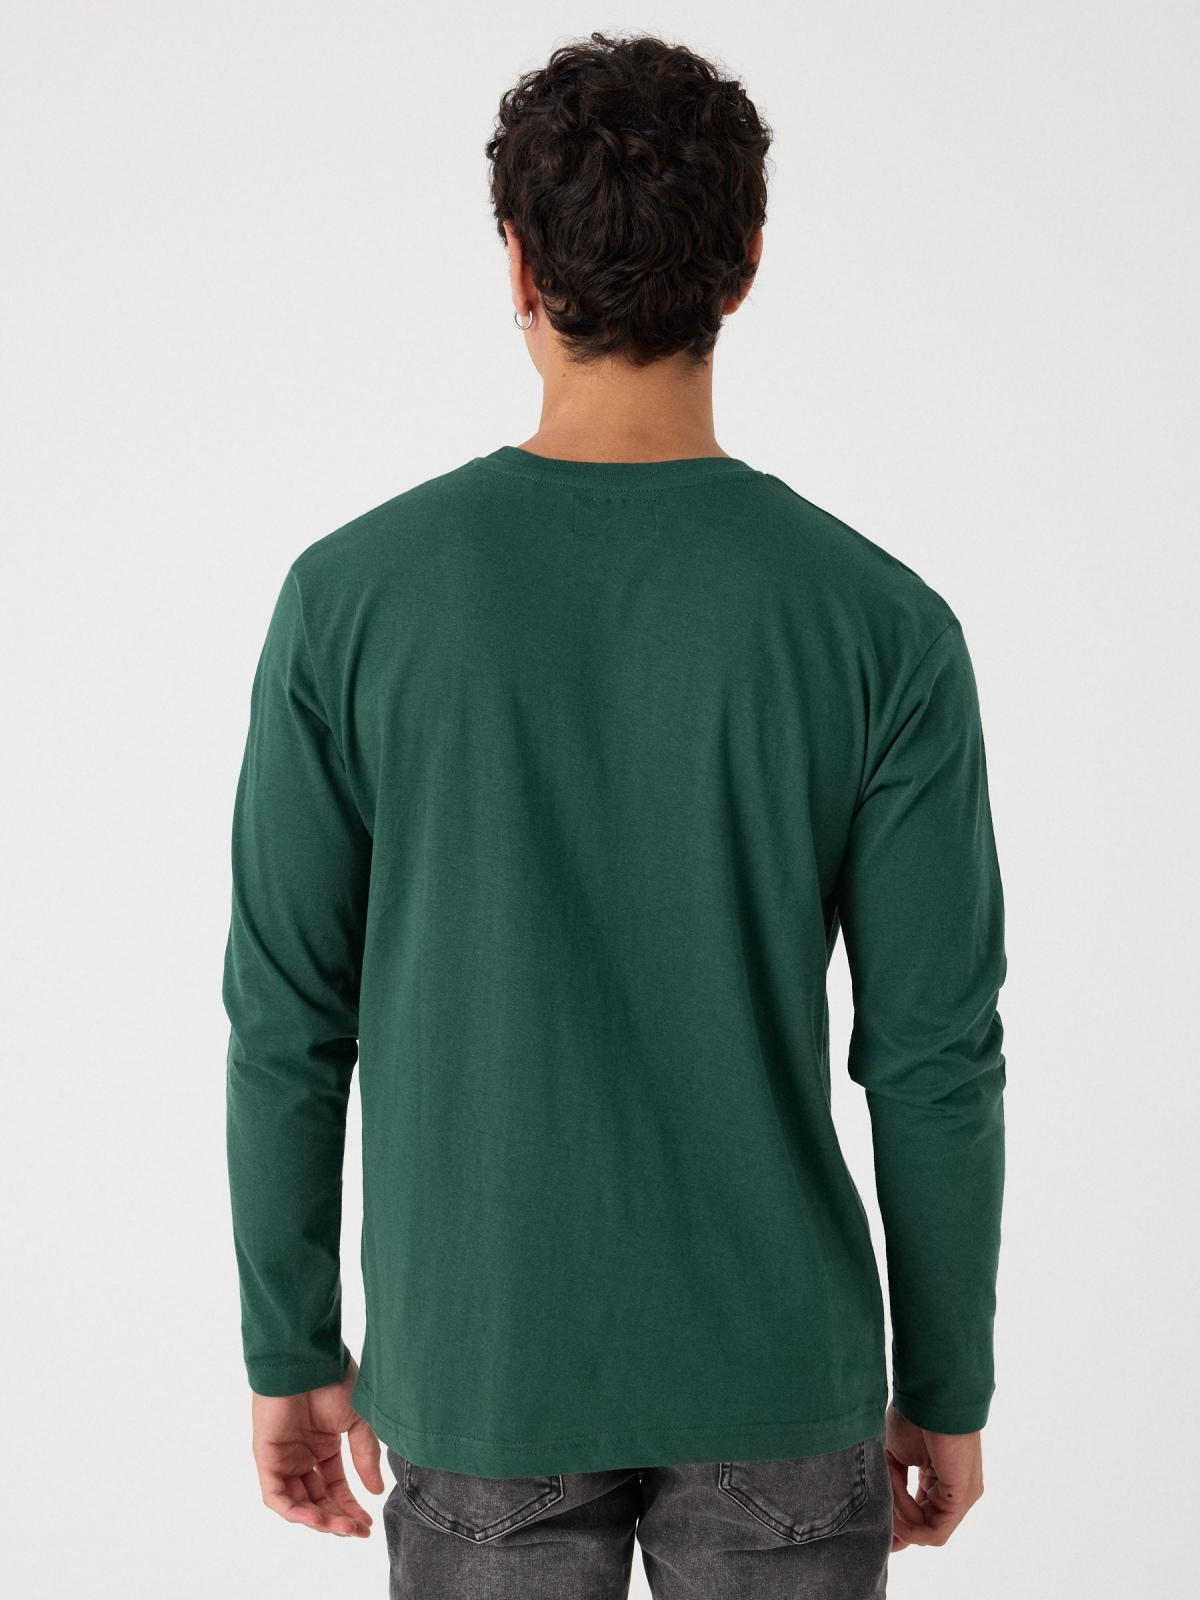 University print t-shirt dark green middle back view